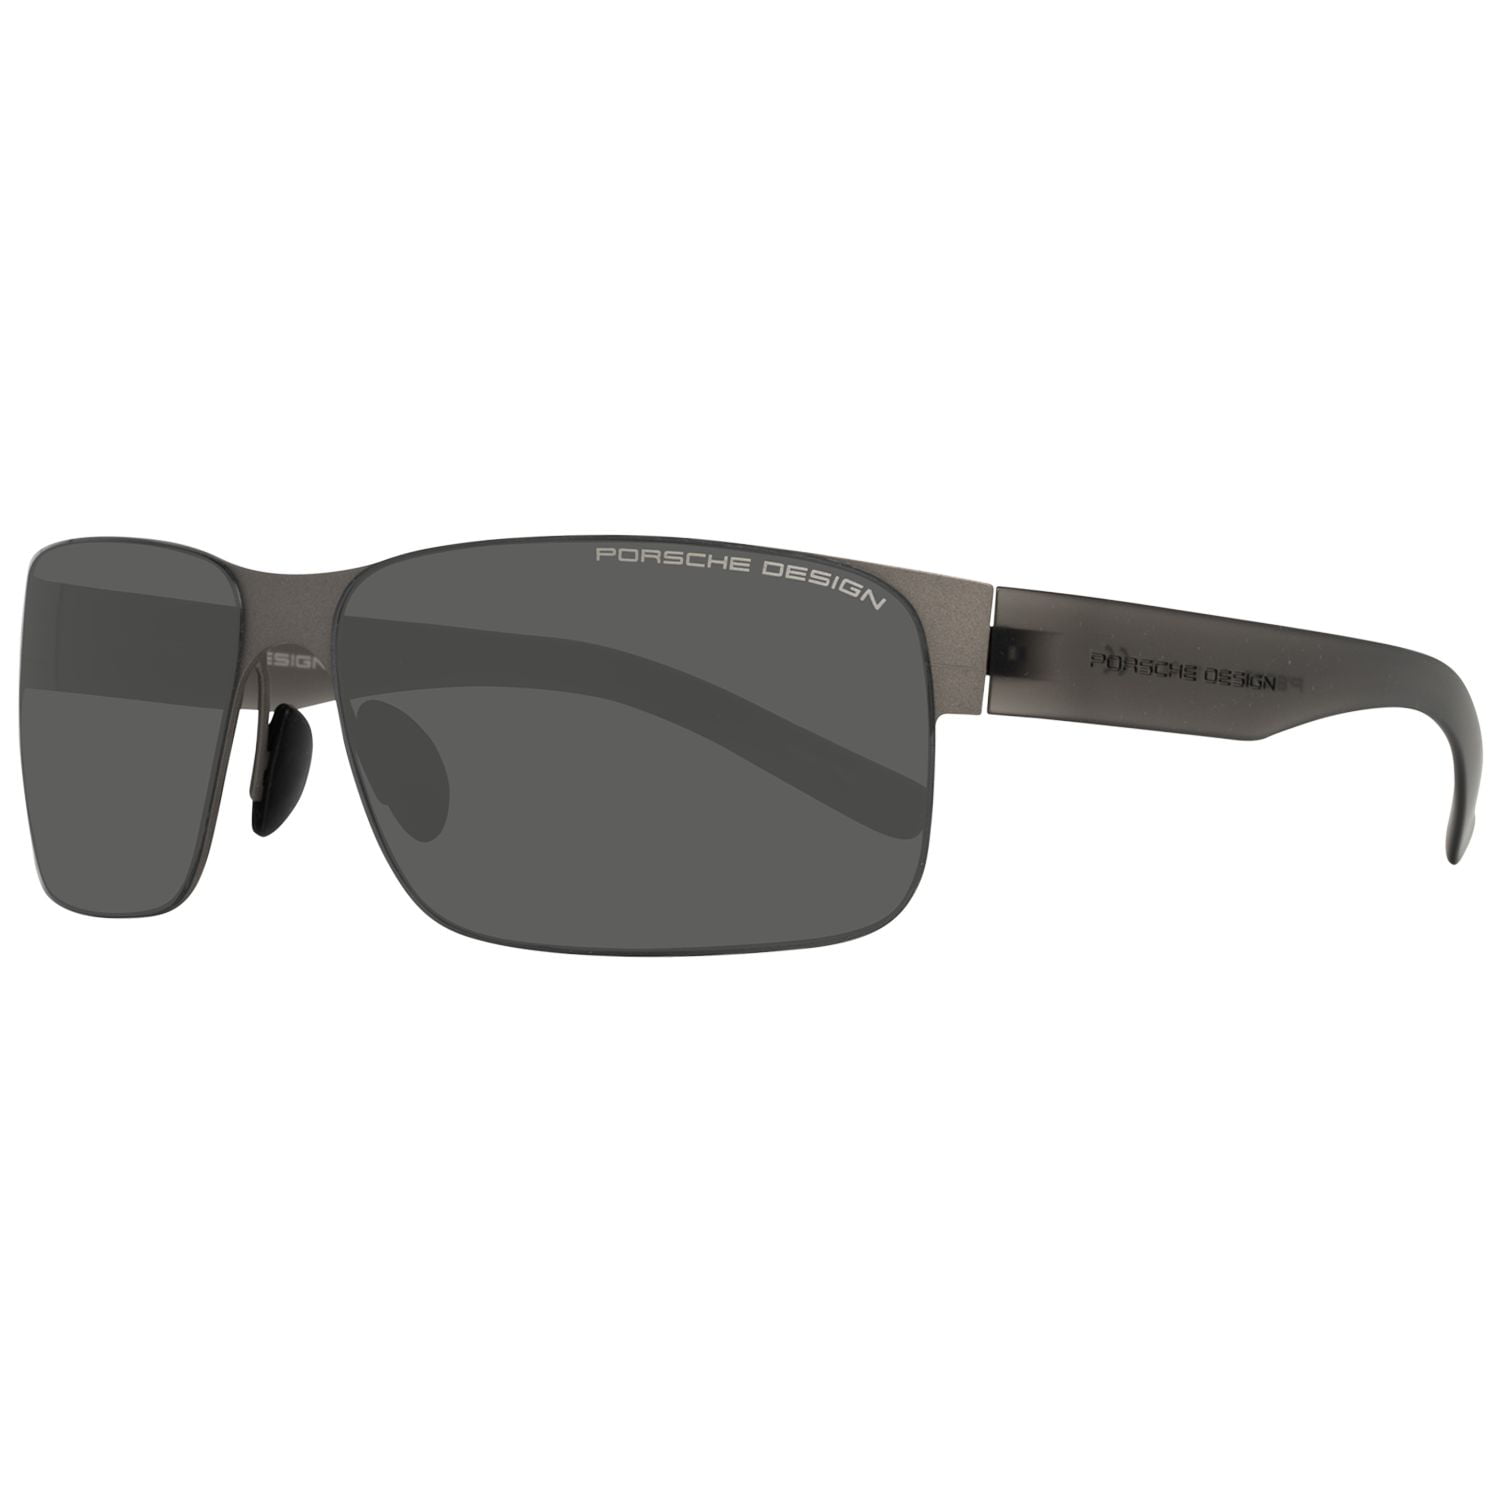 NEW Porsche Design P 8573 B Black/Green Sunglasses 